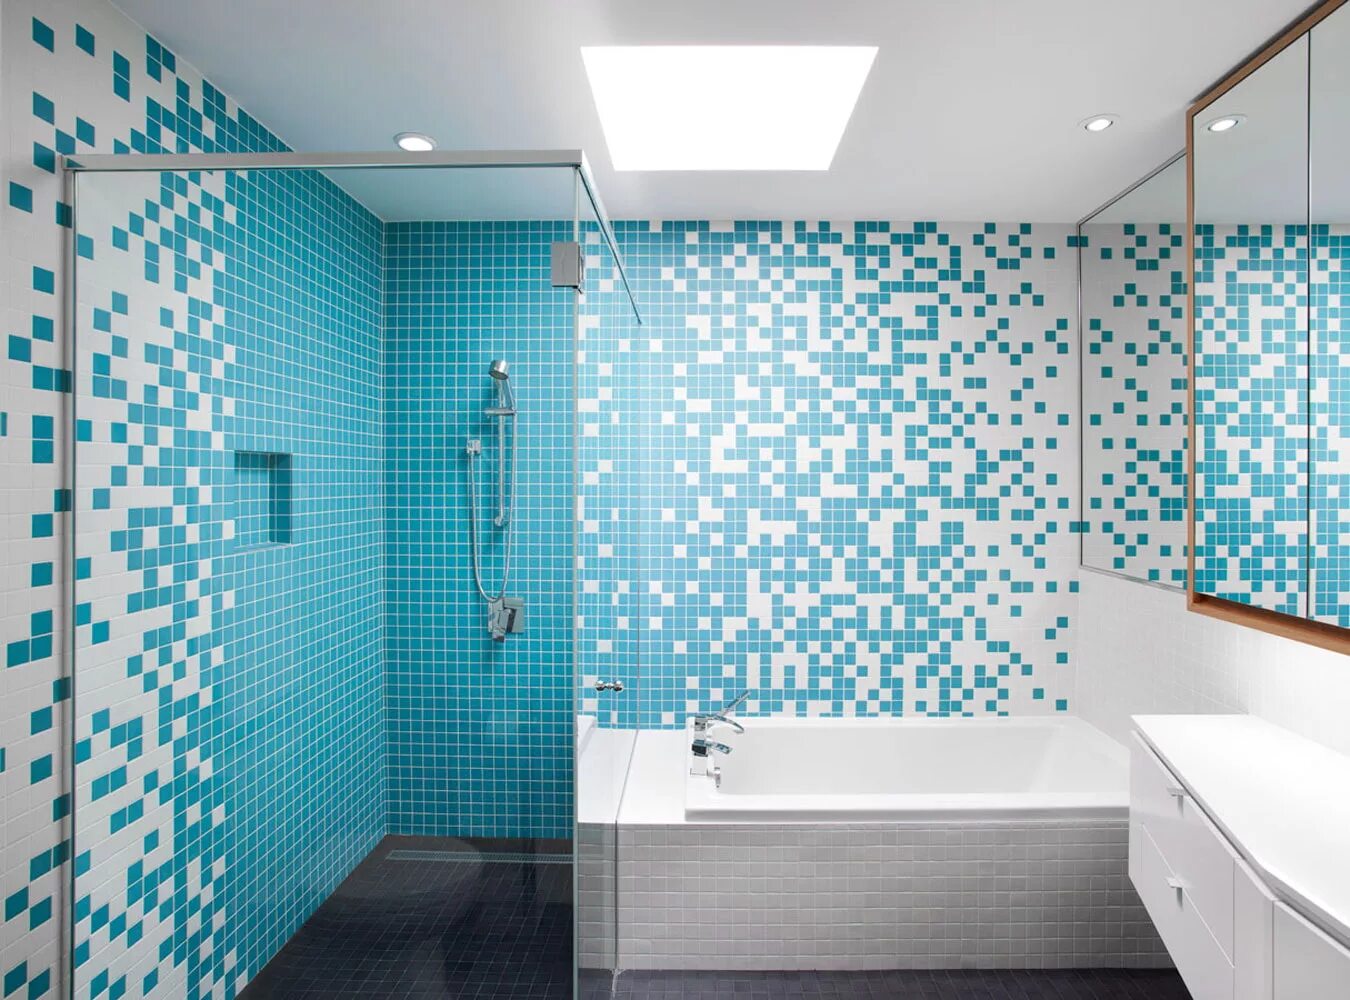 Ванна мозаикой фото. Мозаика в ванной комнате. Ванная с мозаикой. Ванная с мозаикой и плиткой. Ванная с мозаичной плиткой.